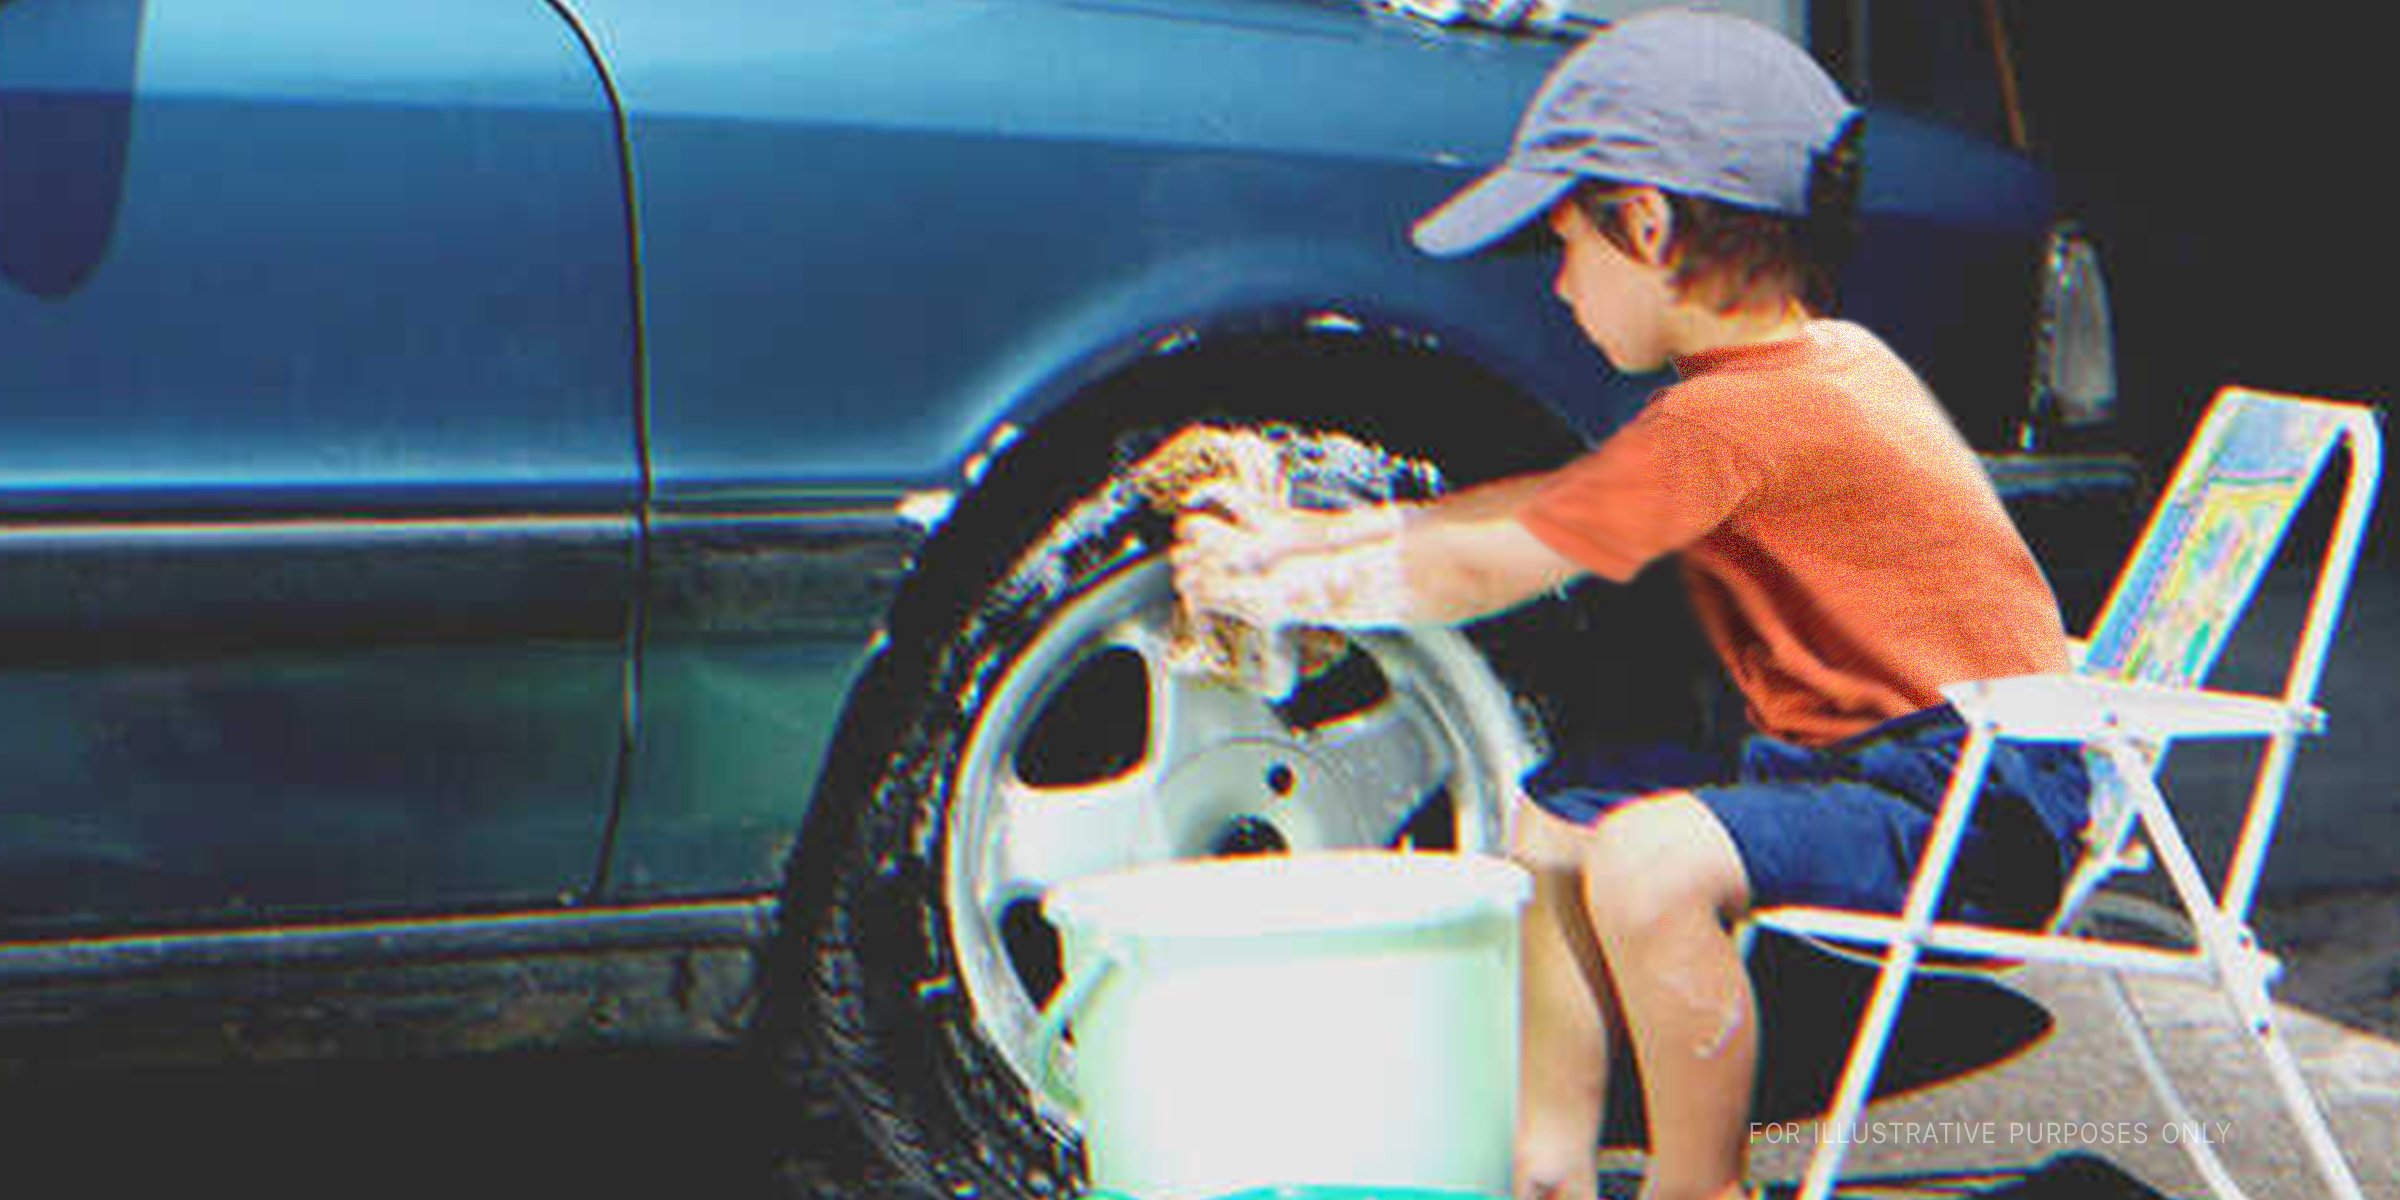 Little boy washing a car | Shutterstock